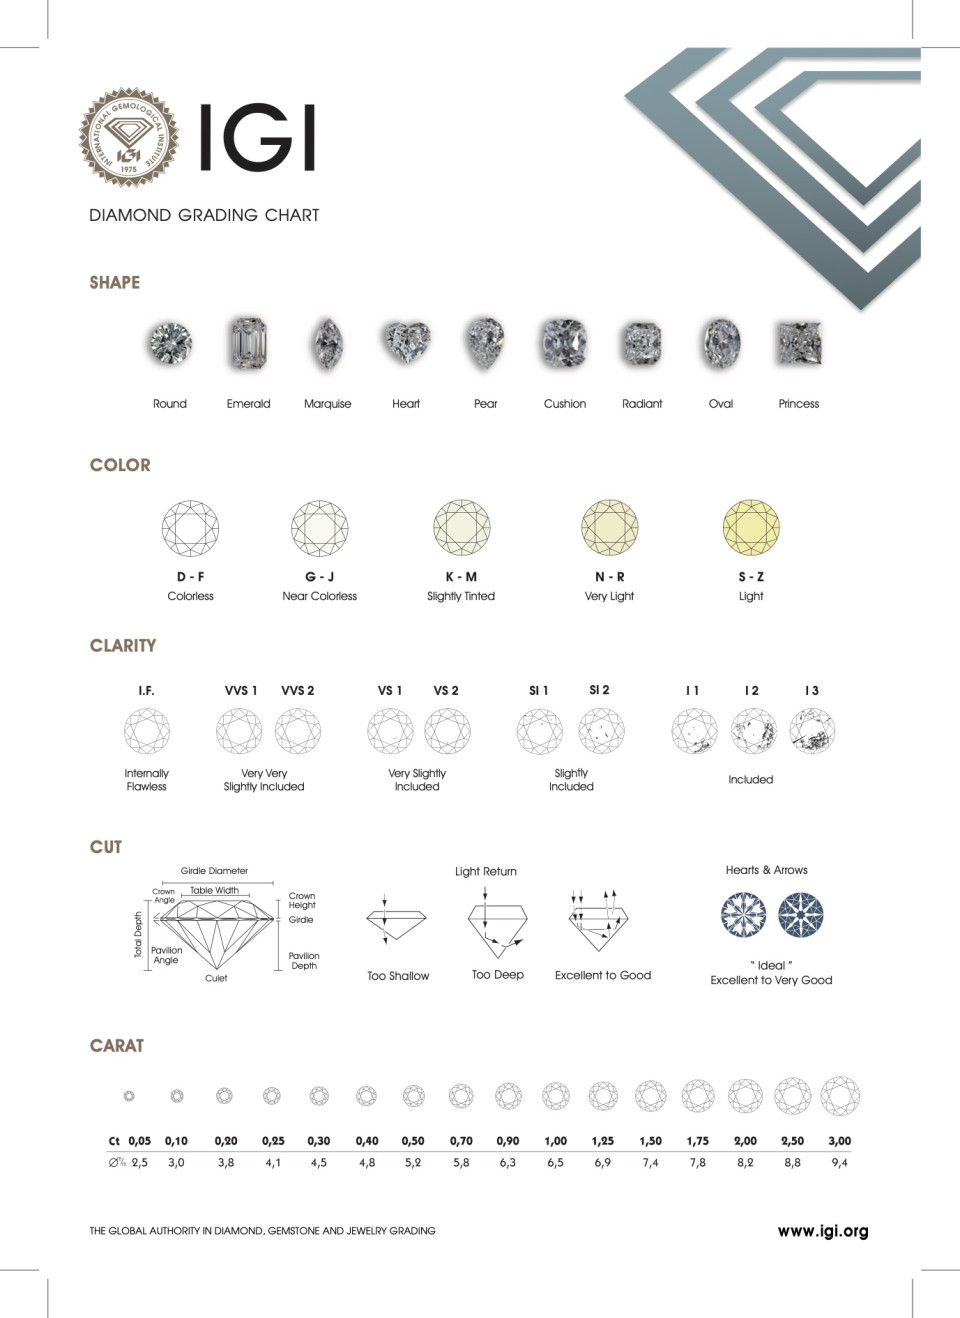 Cushion Brilliant 4.00 Carat Diamond Earrings Set in 18kt White Gold - D Colour VS Clarity - IGI - Image 3 of 3